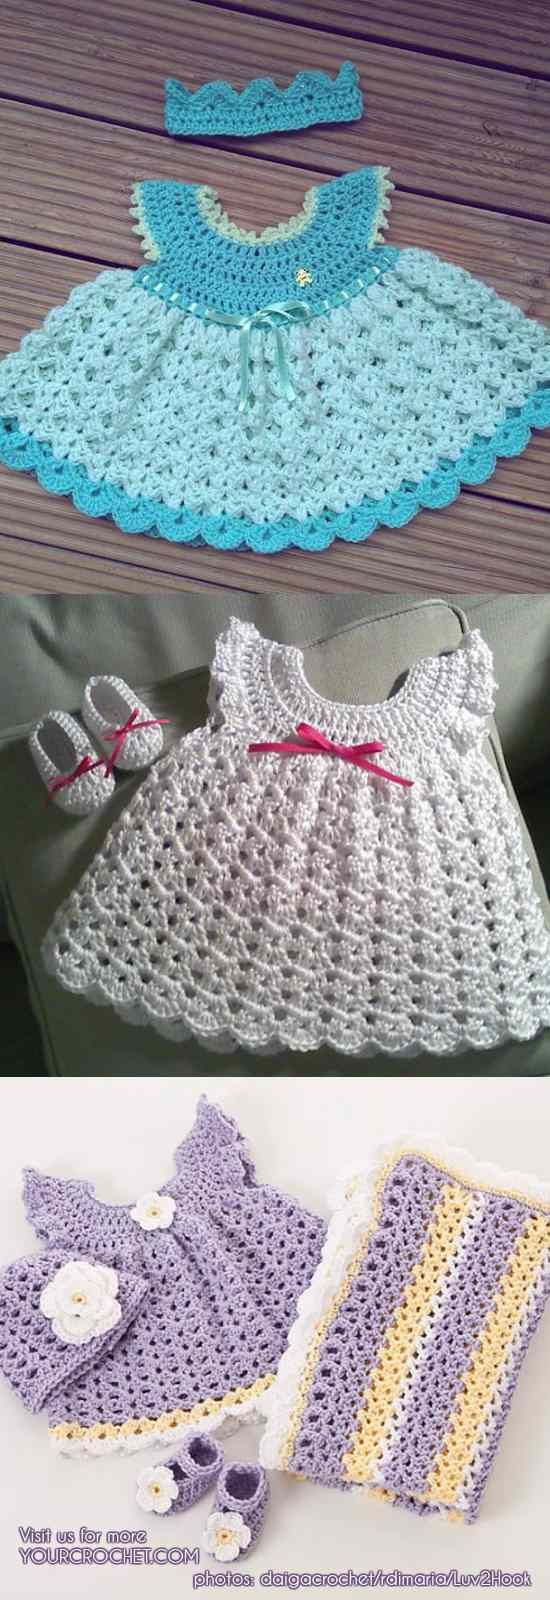 Crochet Baby Pinafore Dress Pattern How To Crochet Angel Wing Ba Dress Patterns Free 800 Pinterest